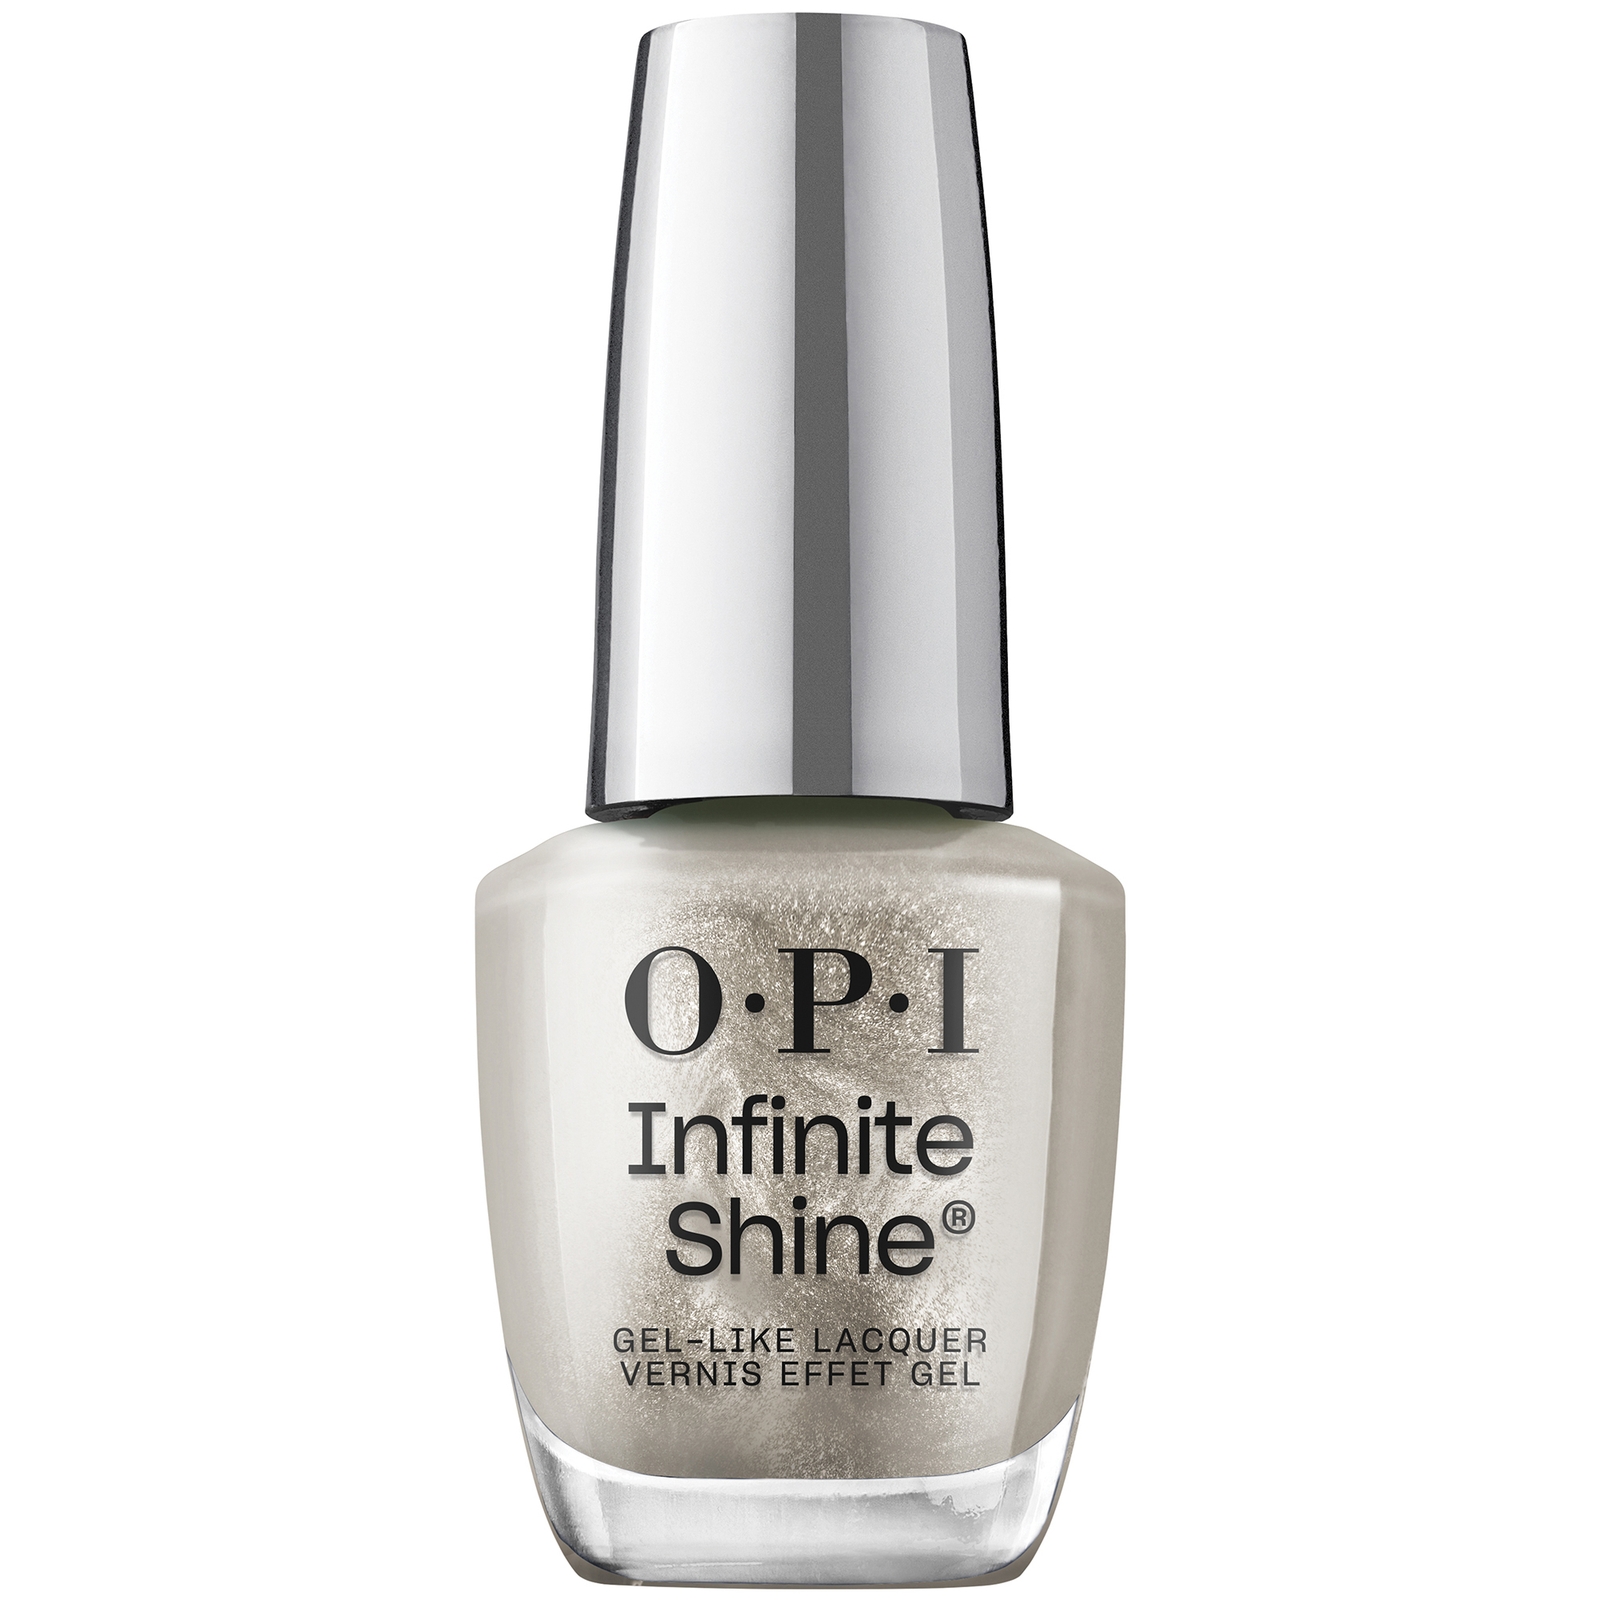 Opi Infinite Shine Long-wear Nail Polish - Work From Chrome 15ml In White